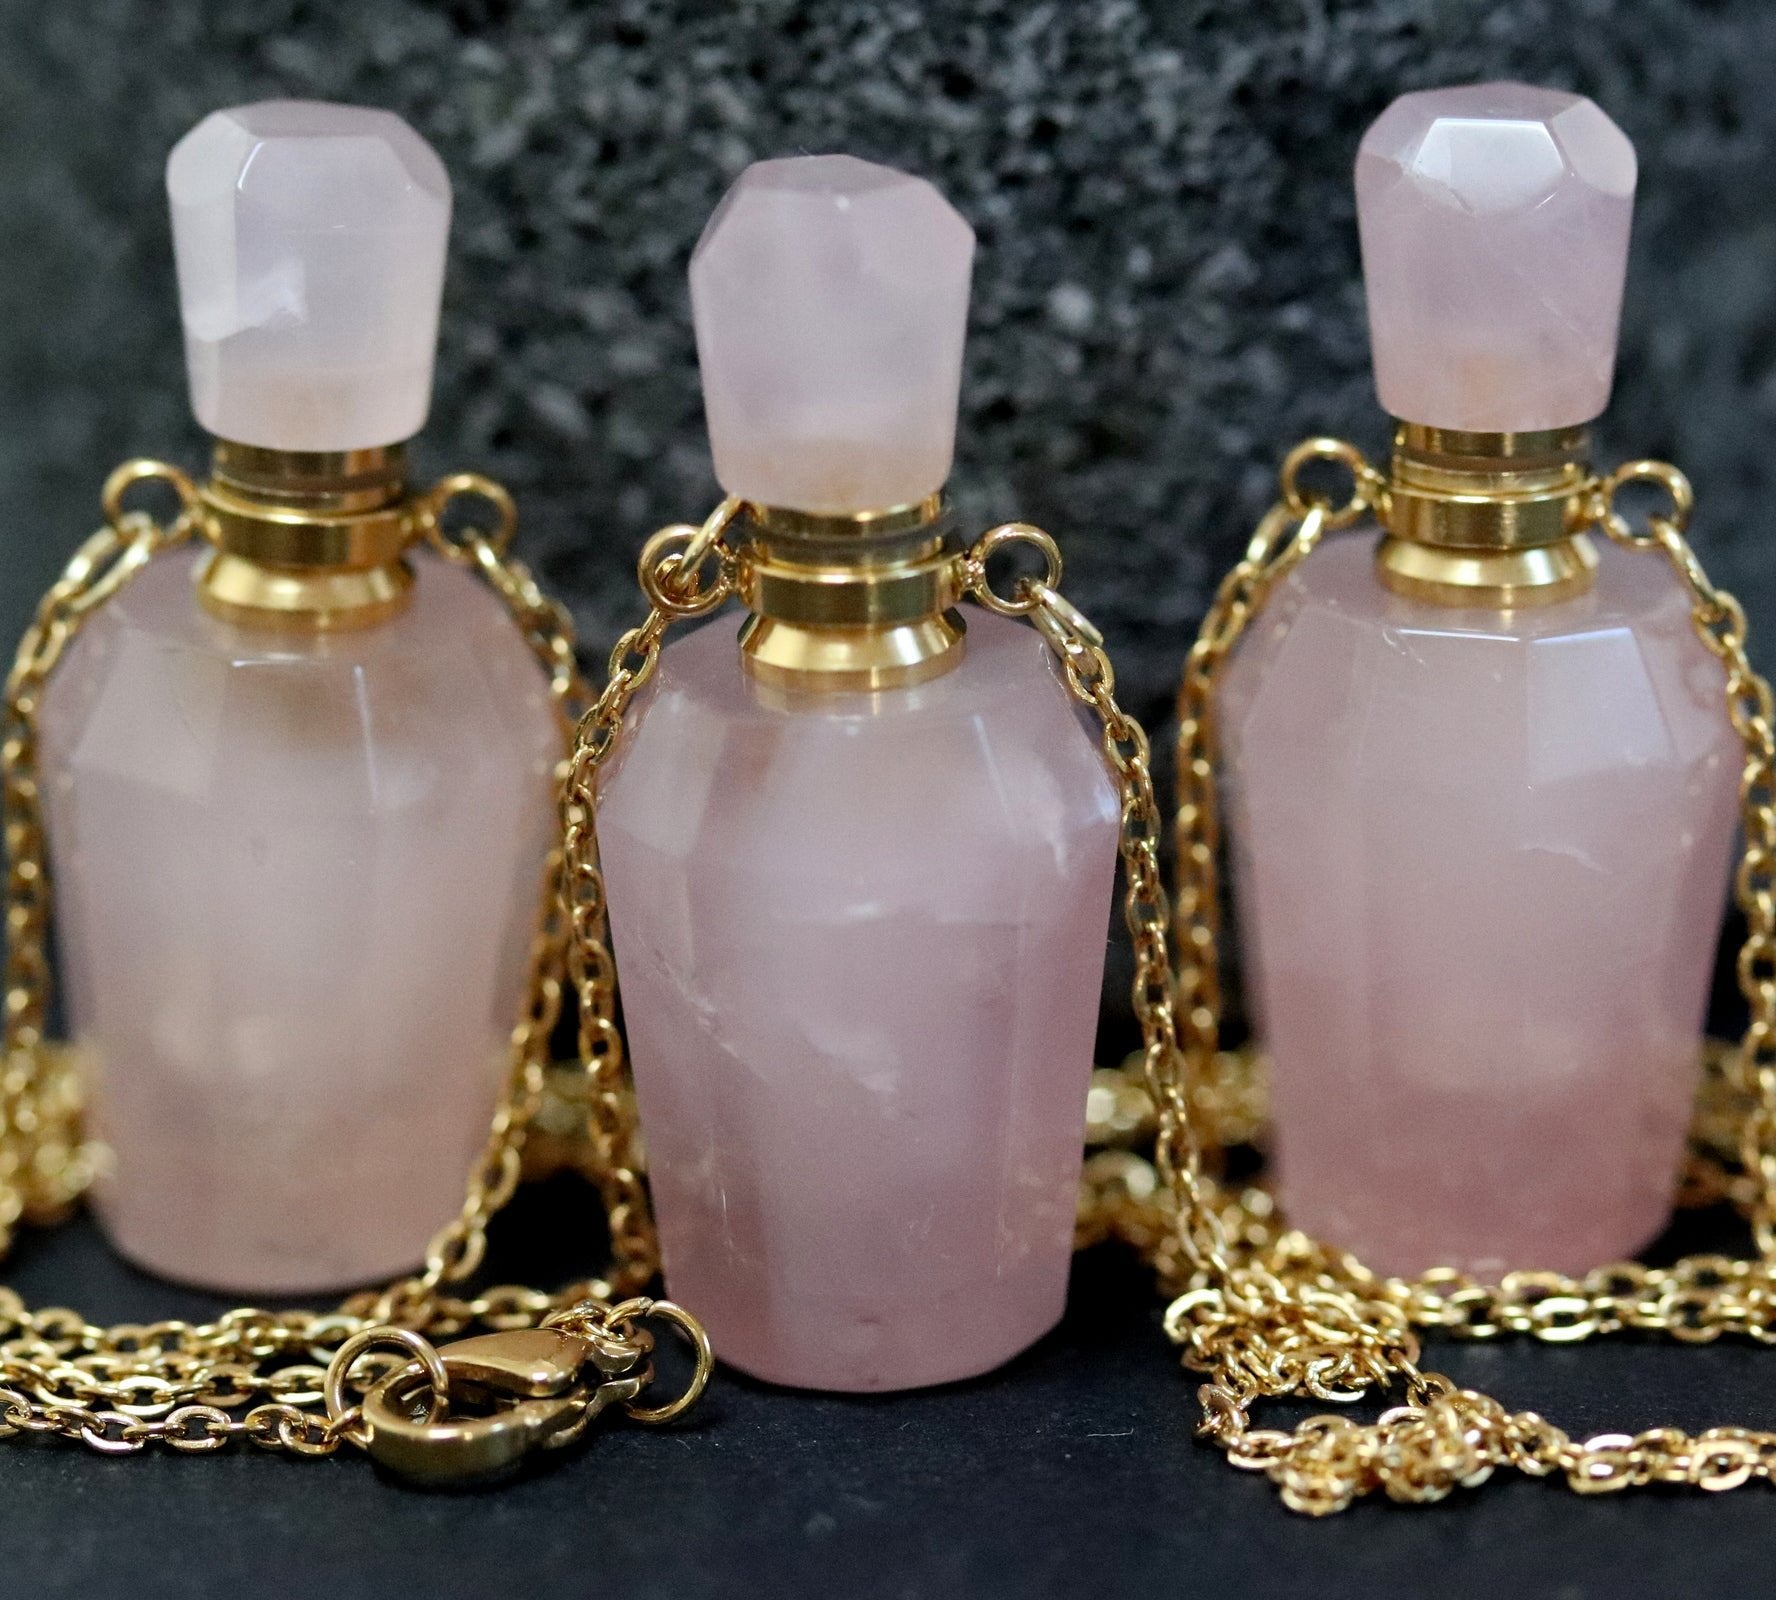 Rose Quartz bottle pendant, perfume or essential oil natural gemstone bottle necklace